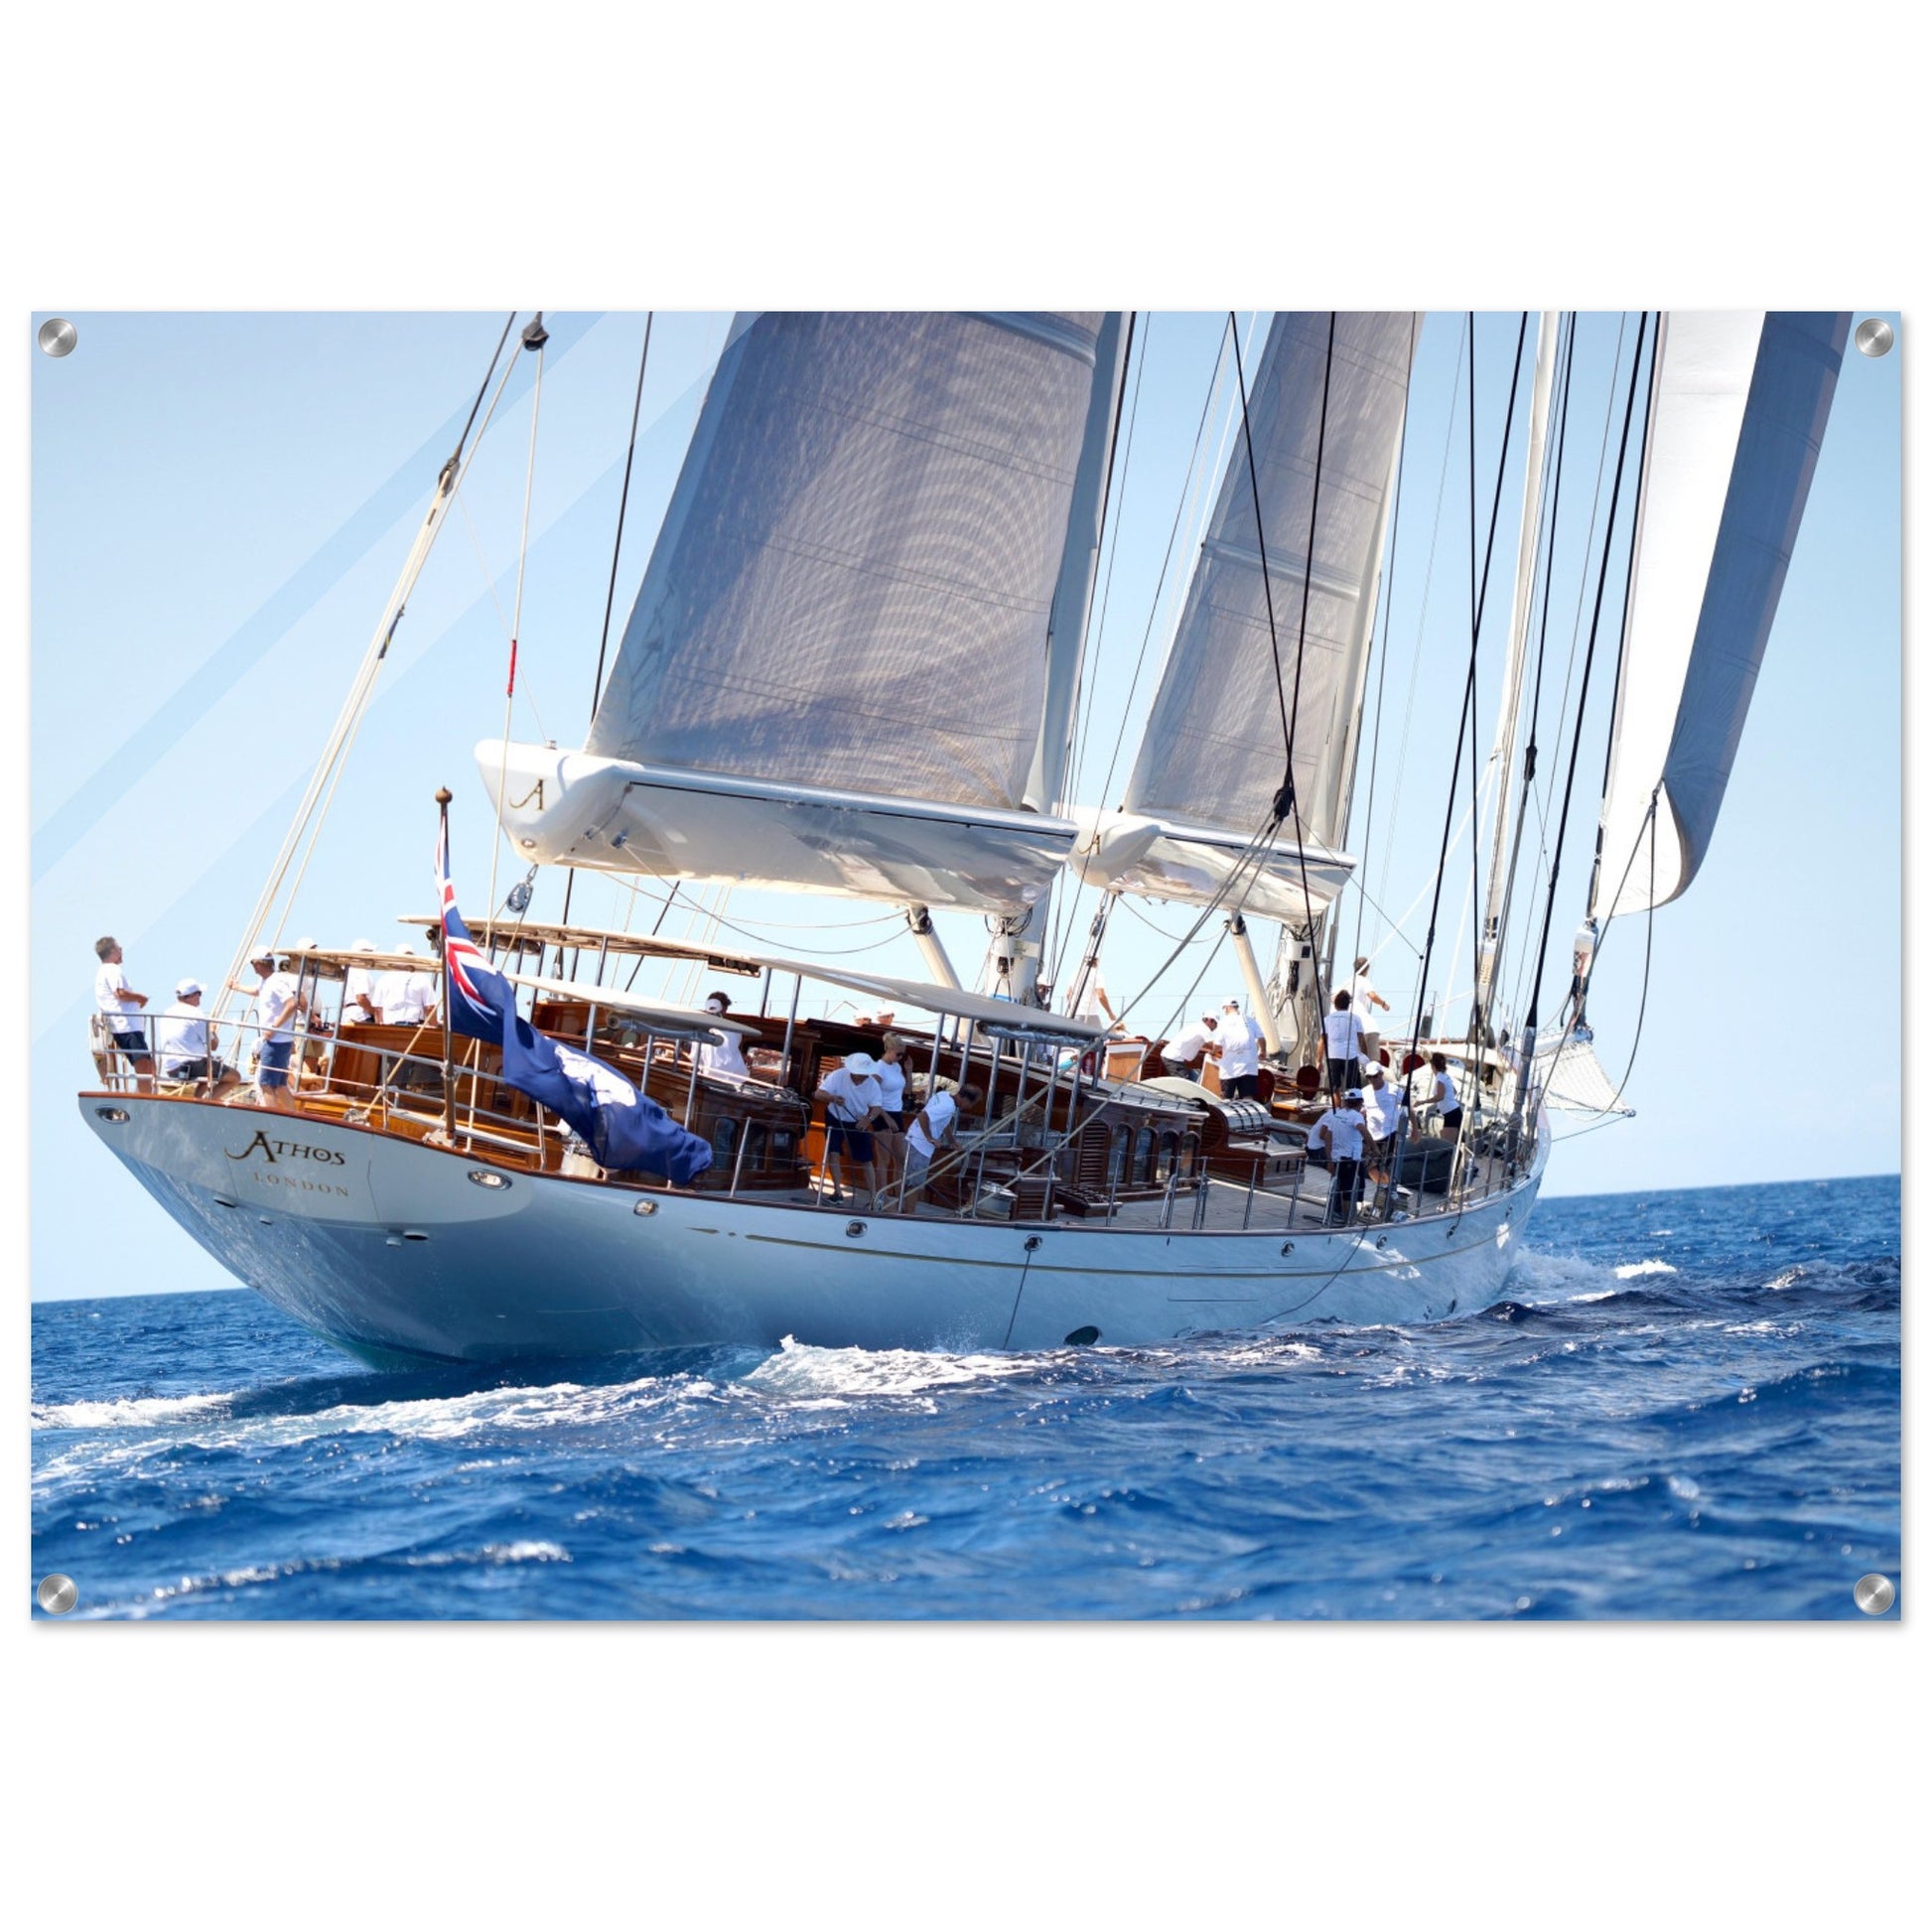 Acrylic HQ Photo Print of Super Sailing Yacht Athos 70X100cm - Posterify